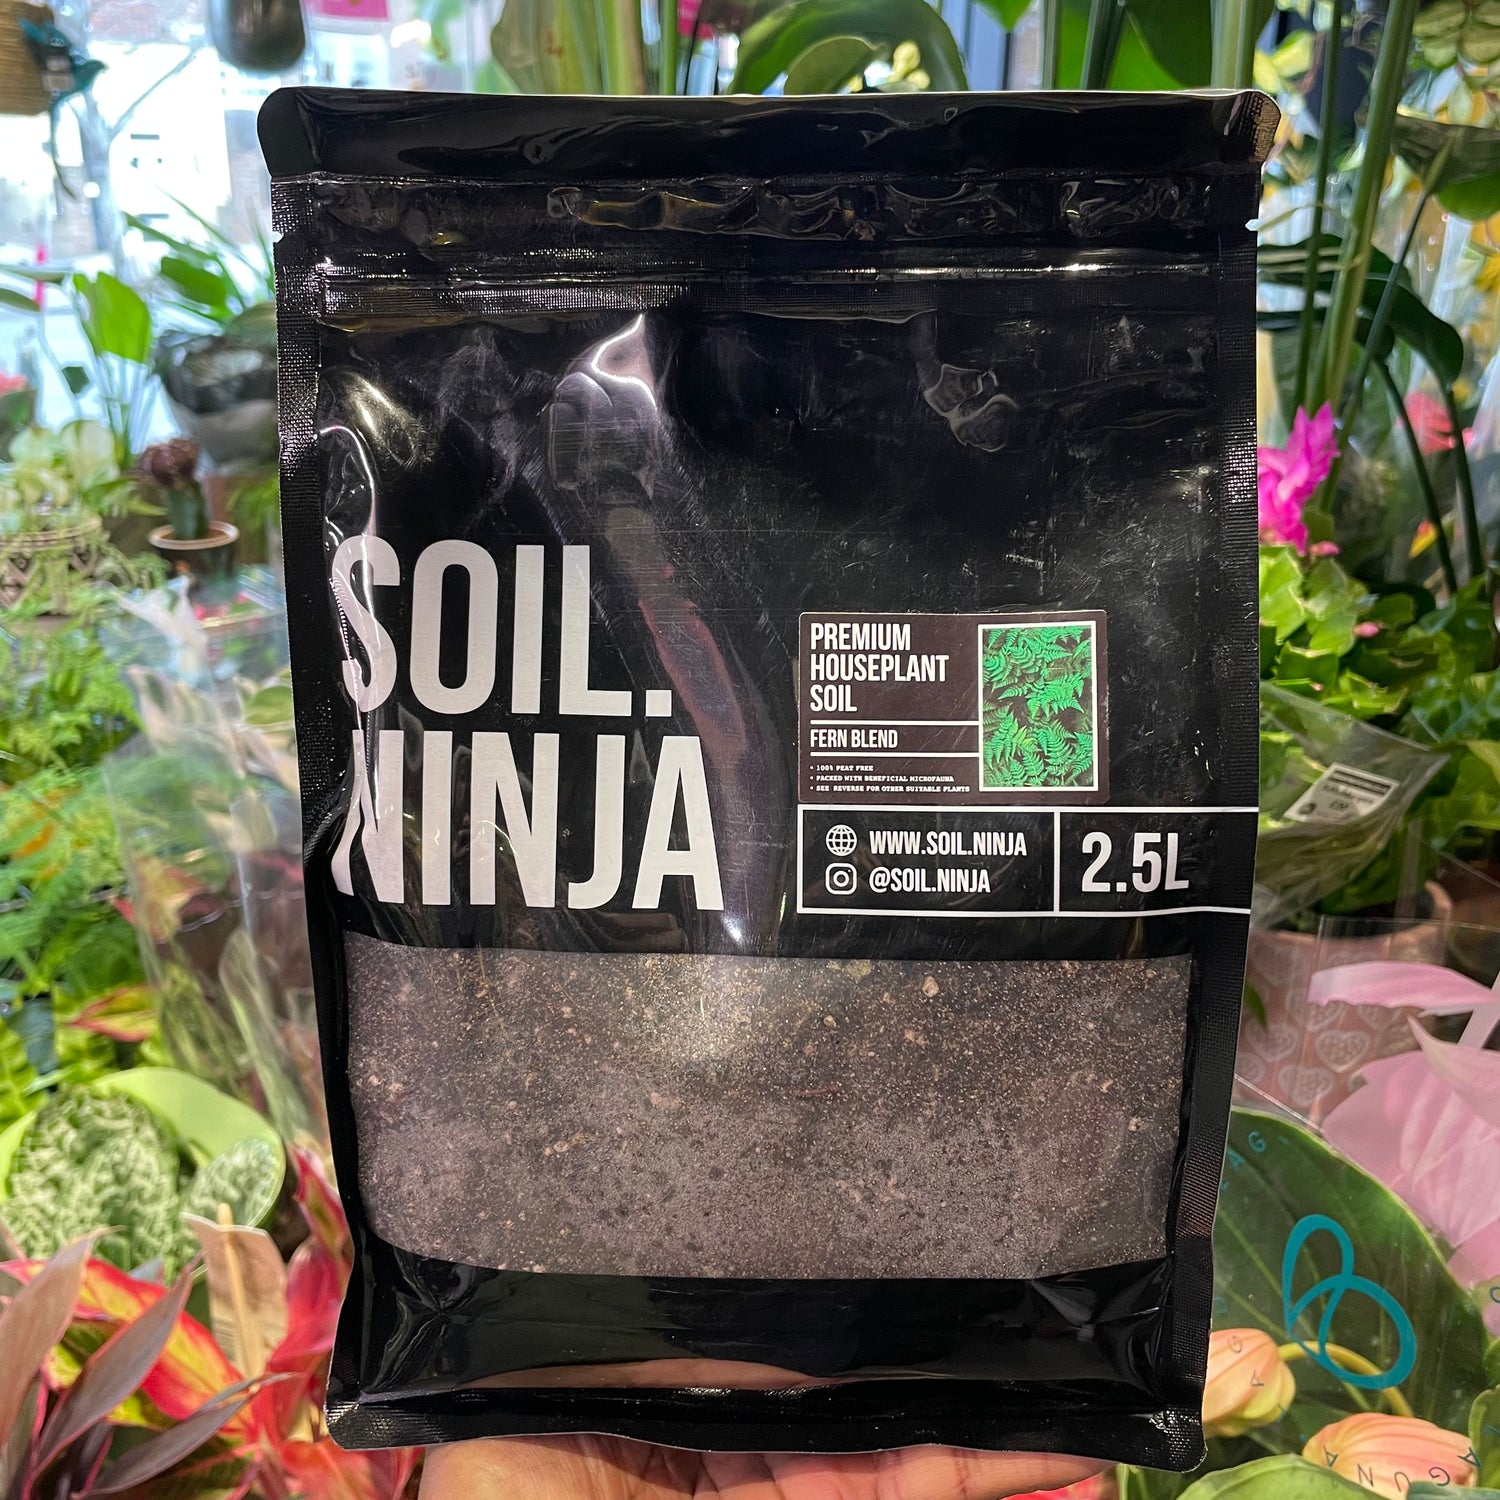 A bag of Soil Ninja | Fern 2.5L in Urban Tropicana’s store in Chiswick, London.